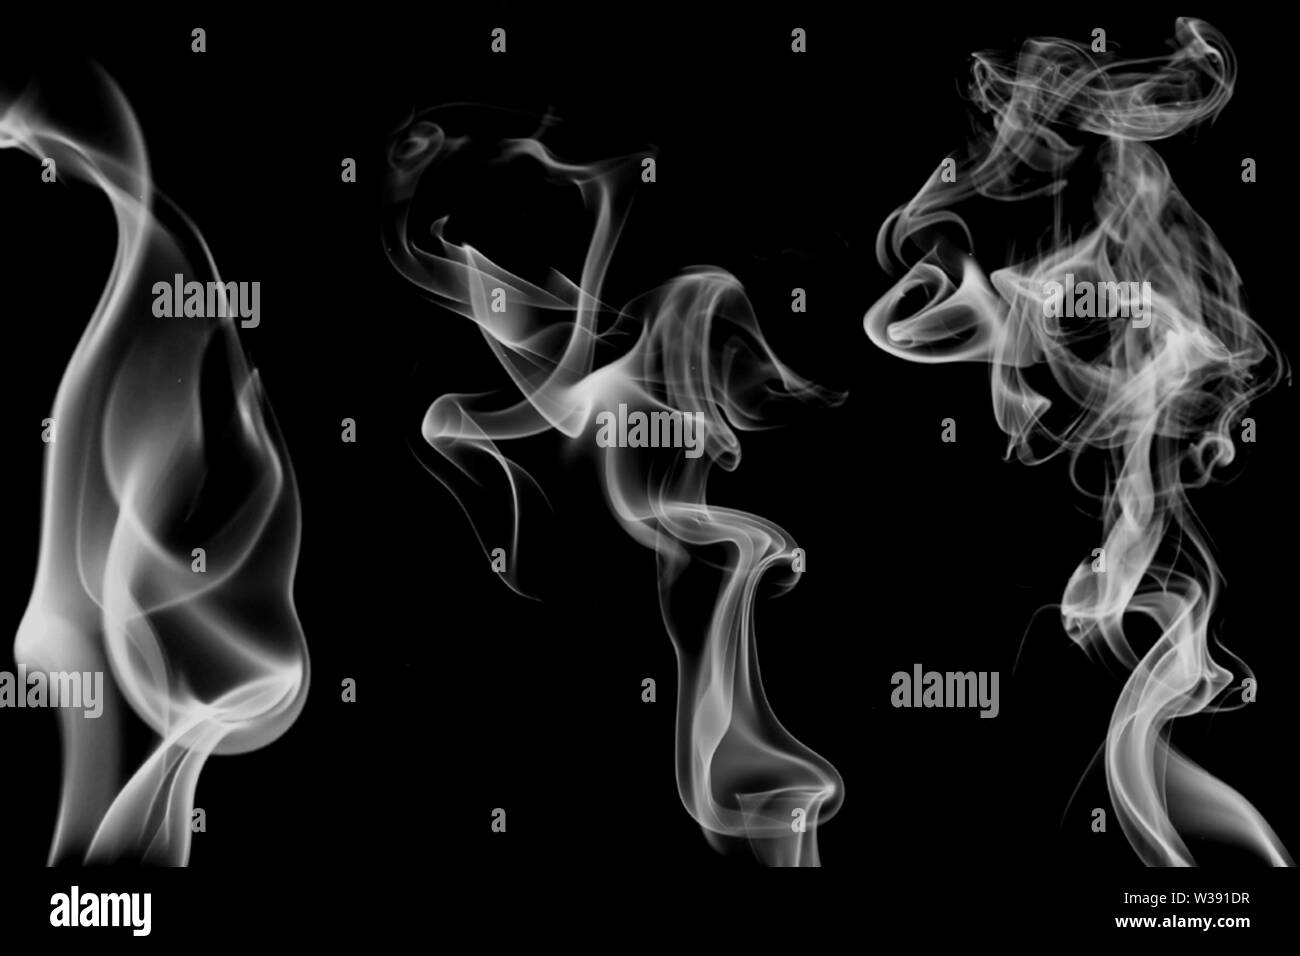 set of three smoke plumes on black background Stock Photo